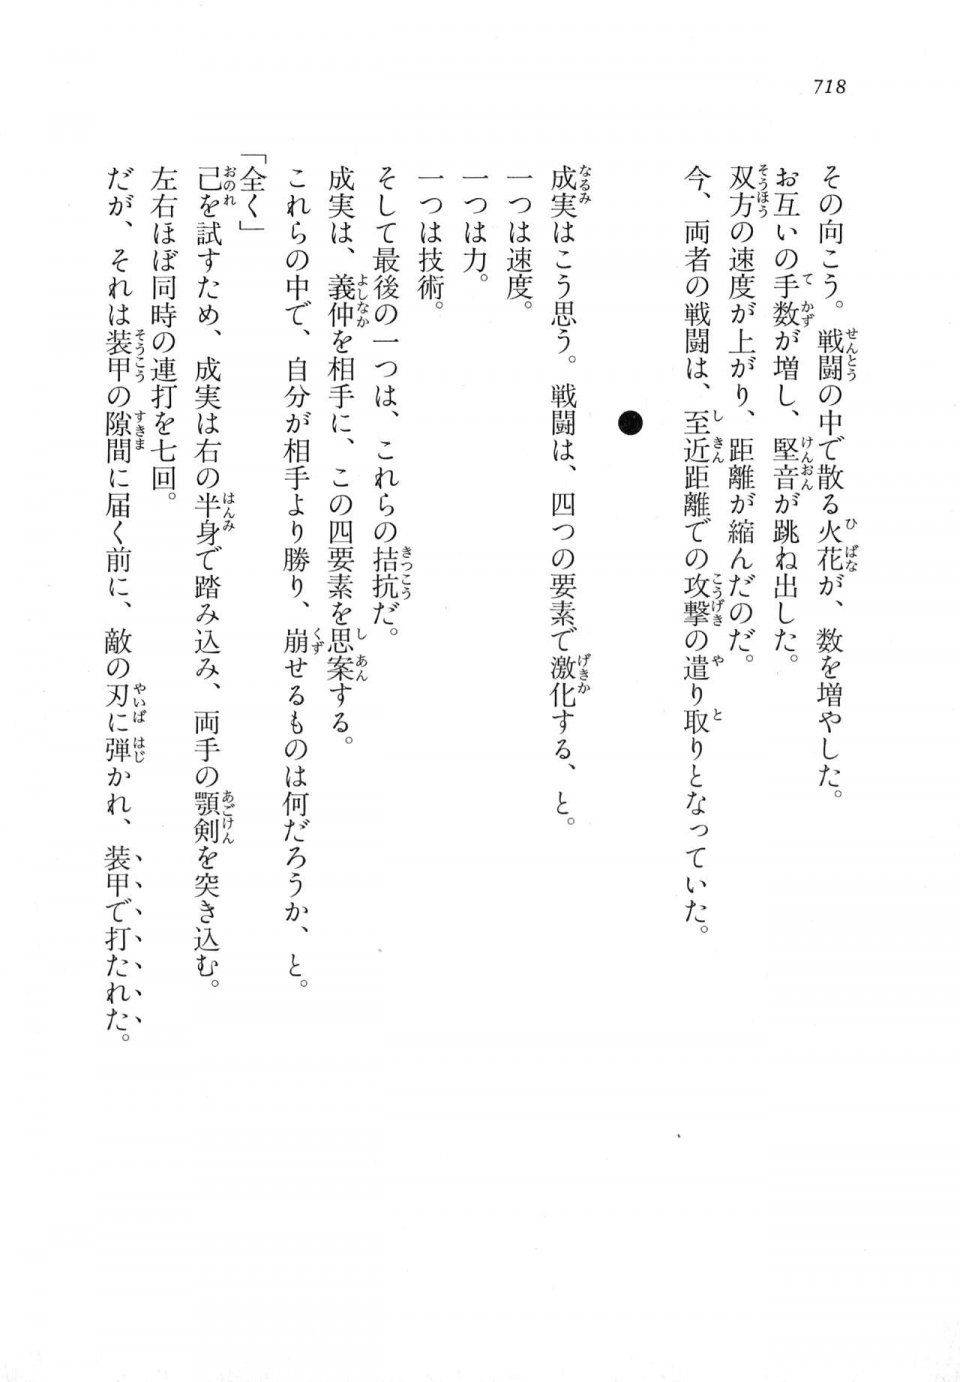 Kyoukai Senjou no Horizon LN Vol 18(7C) Part 2 - Photo #158